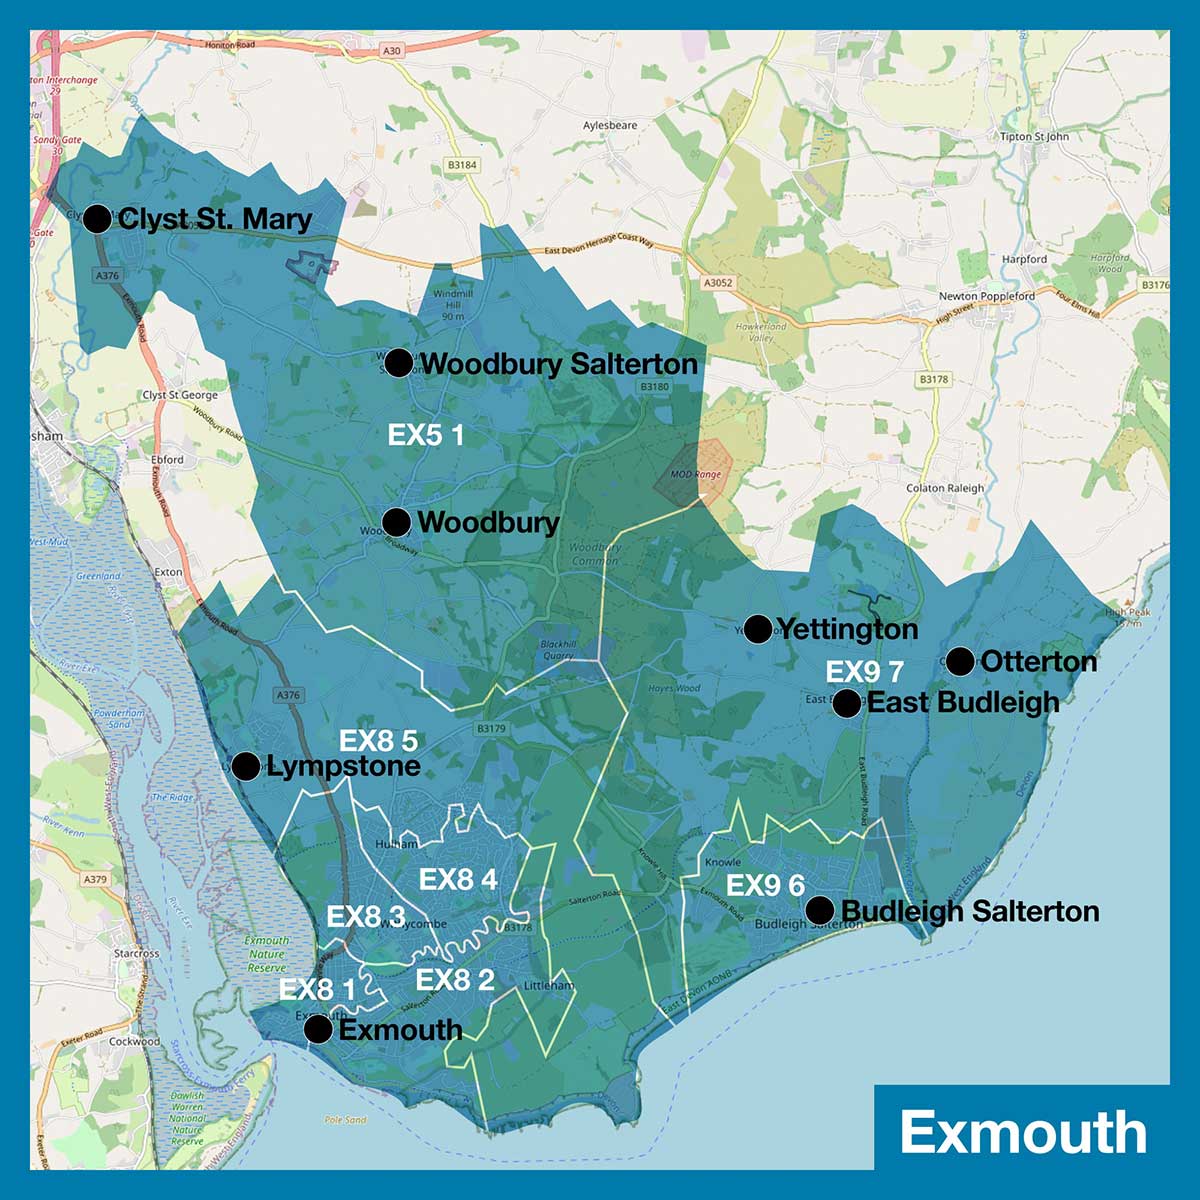 Exmouth-Advertising-Areas-One-Magazine